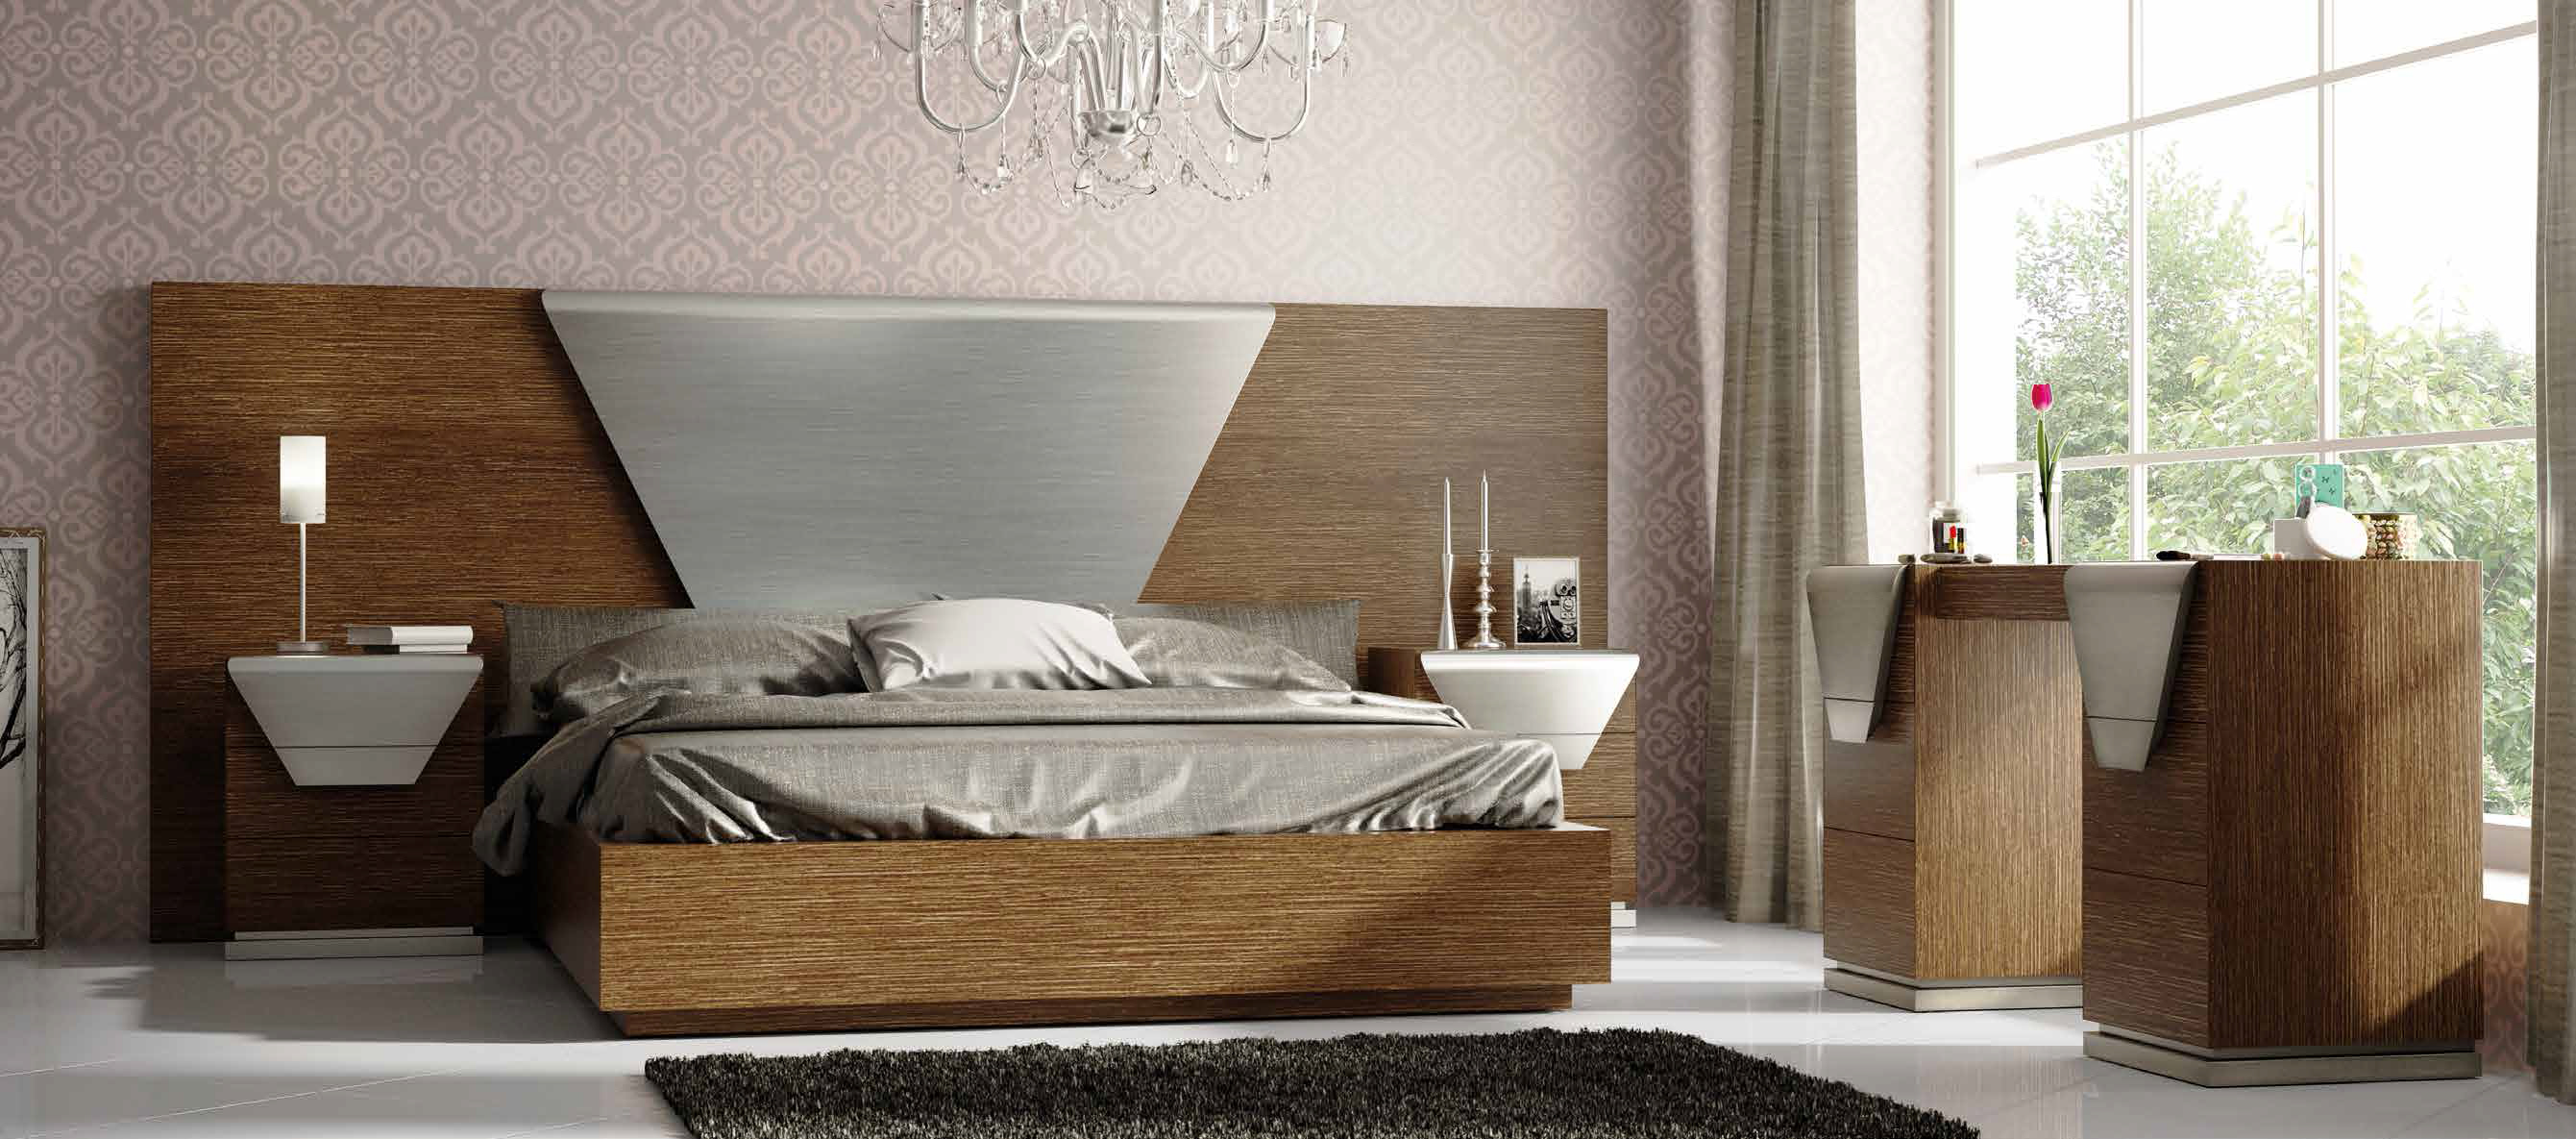 Brands Franco Furniture Bedrooms vol3, Spain DOR 86